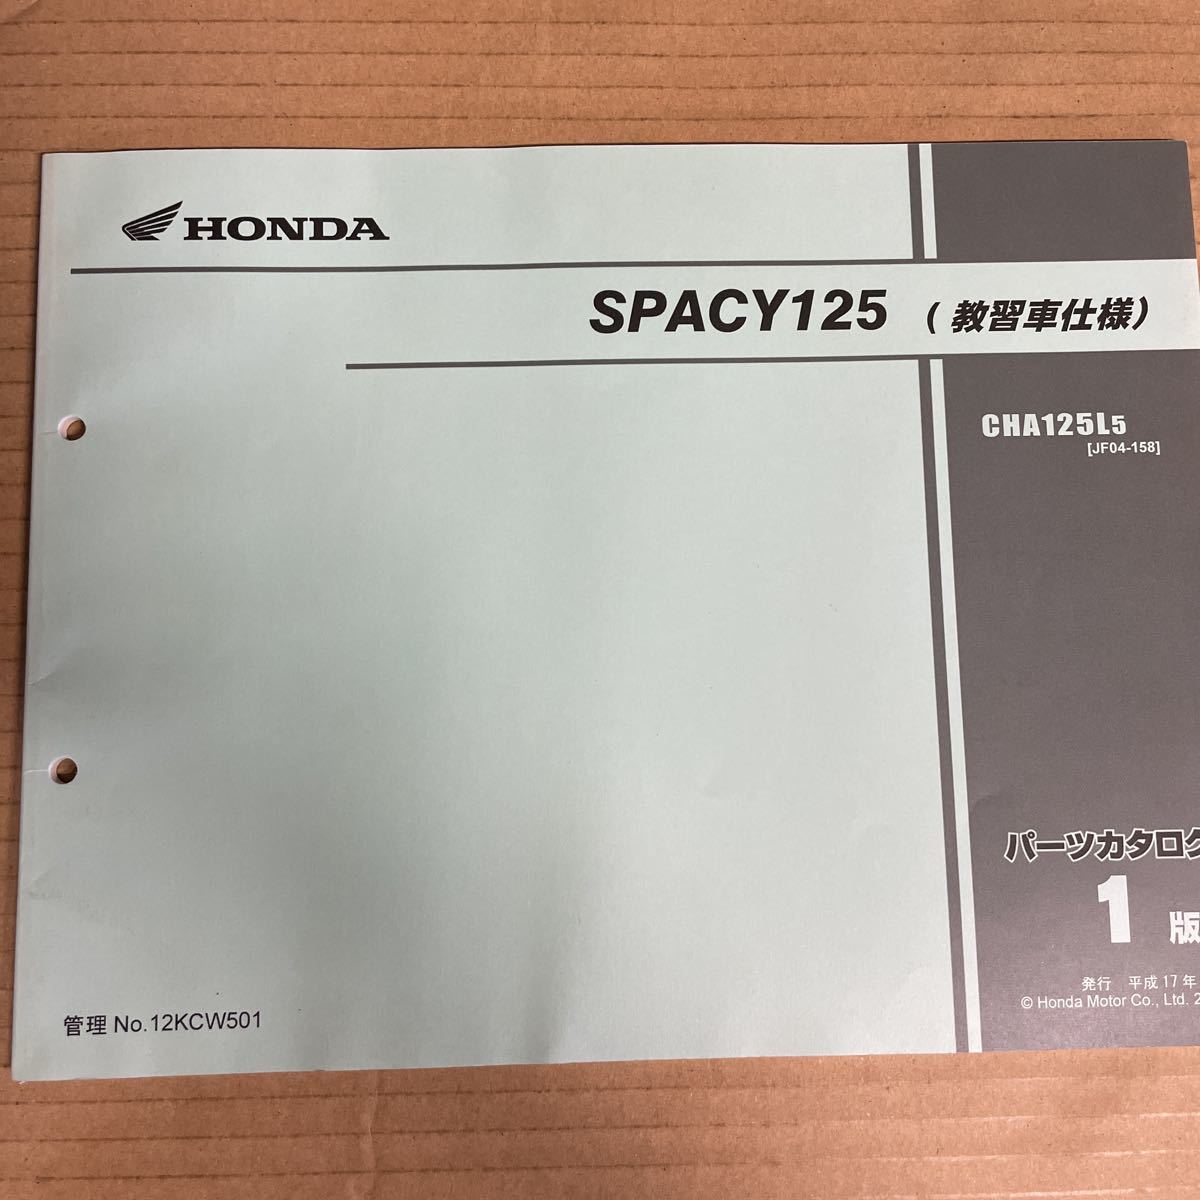  Honda Spacy 125 training car specification parts list JF04 HM435